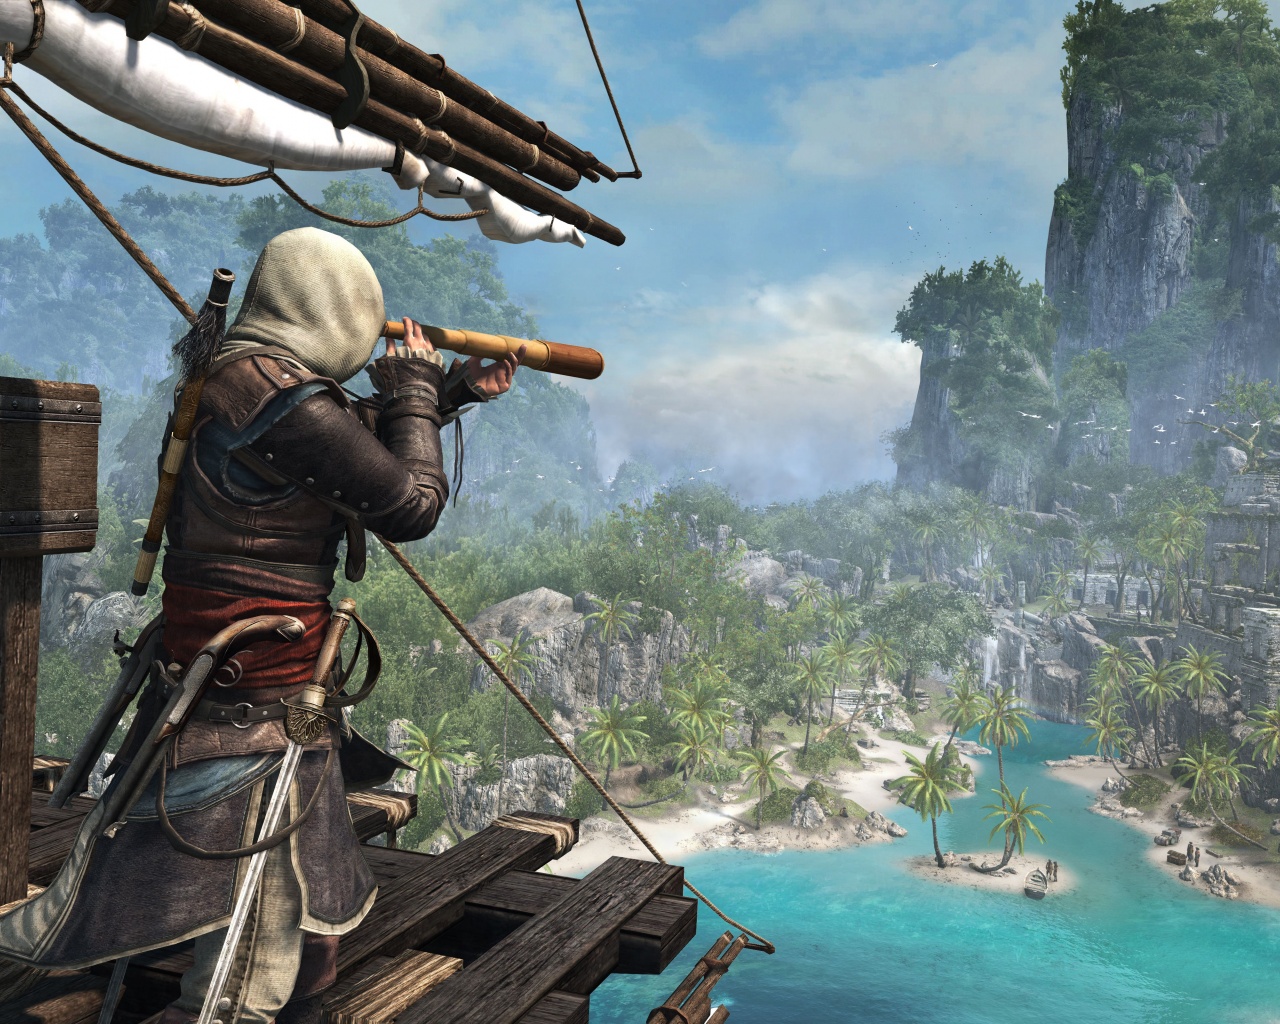 Assassins Creed IV - Black Flag